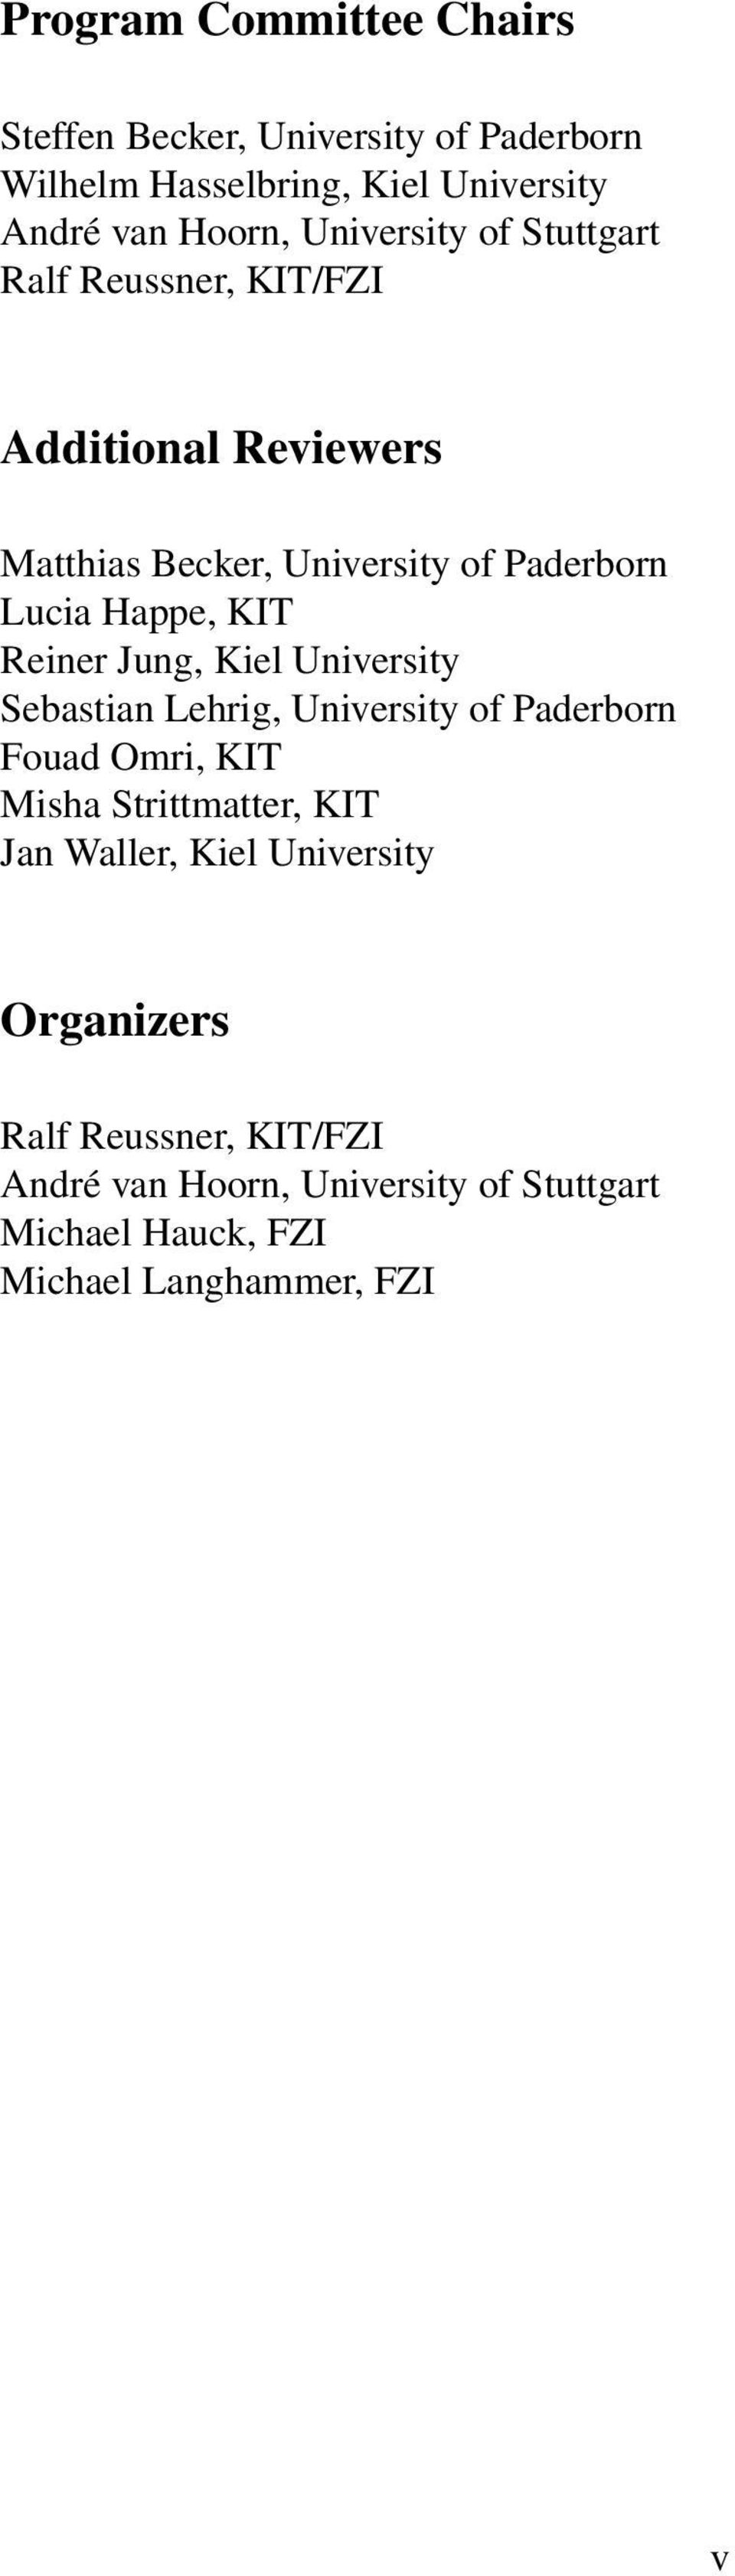 Reiner Jung, Kiel University Sebastian Lehrig, University of Paderborn Fouad Omri, KIT Misha Strittmatter, KIT Jan Waller,